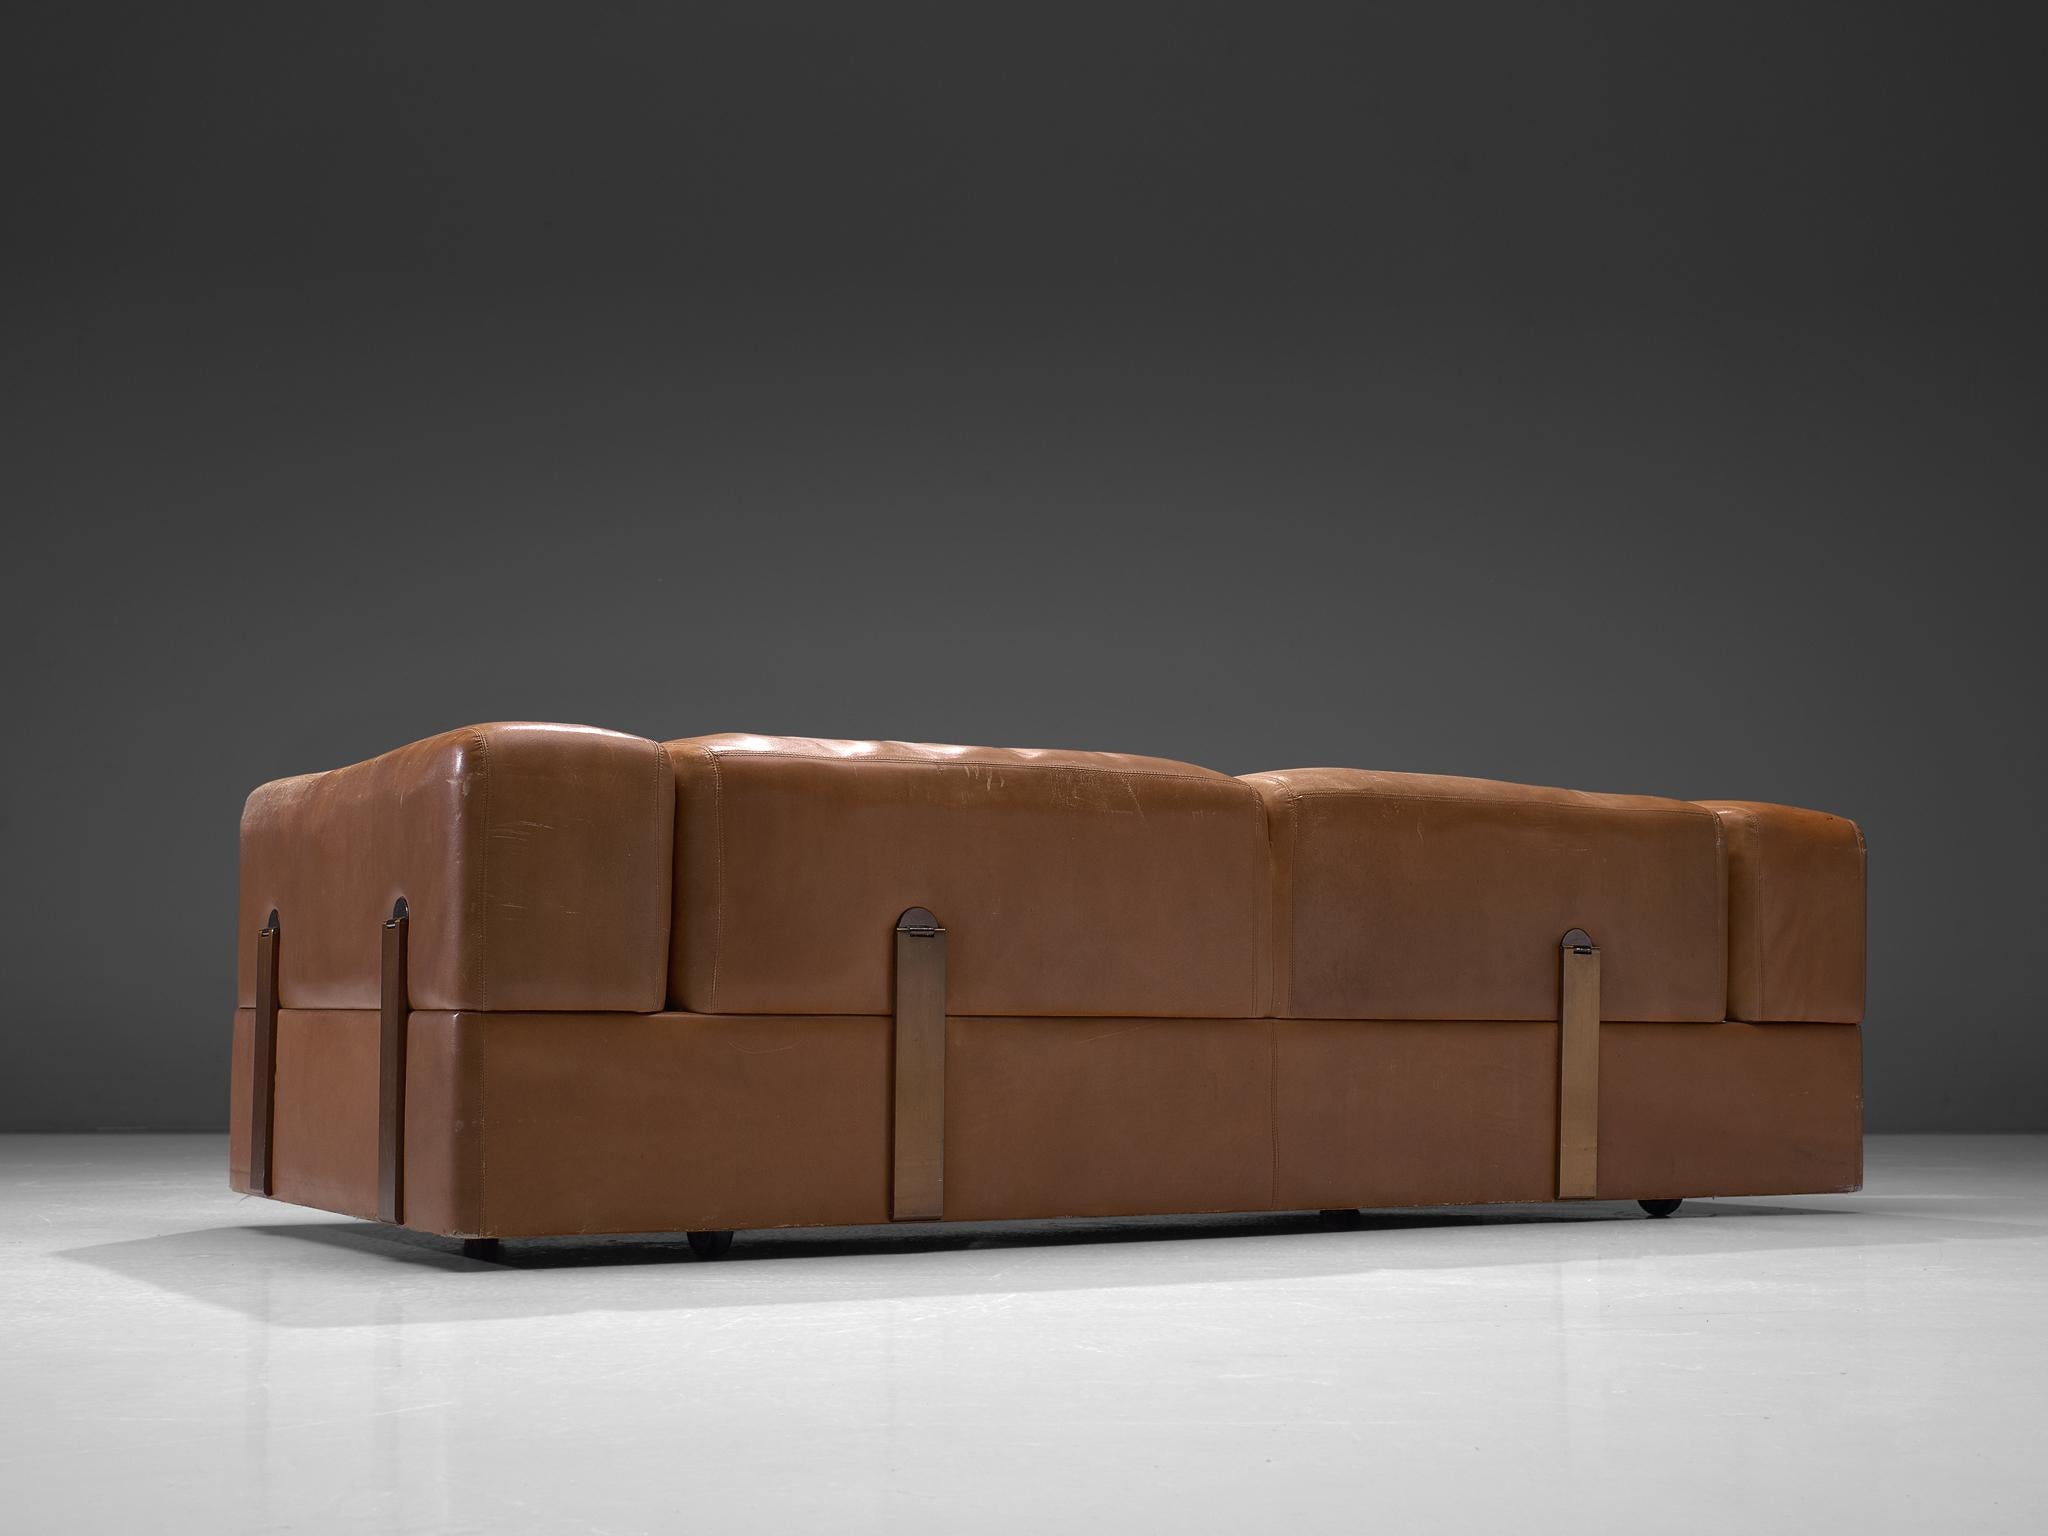 cognac leather sleeper sofa